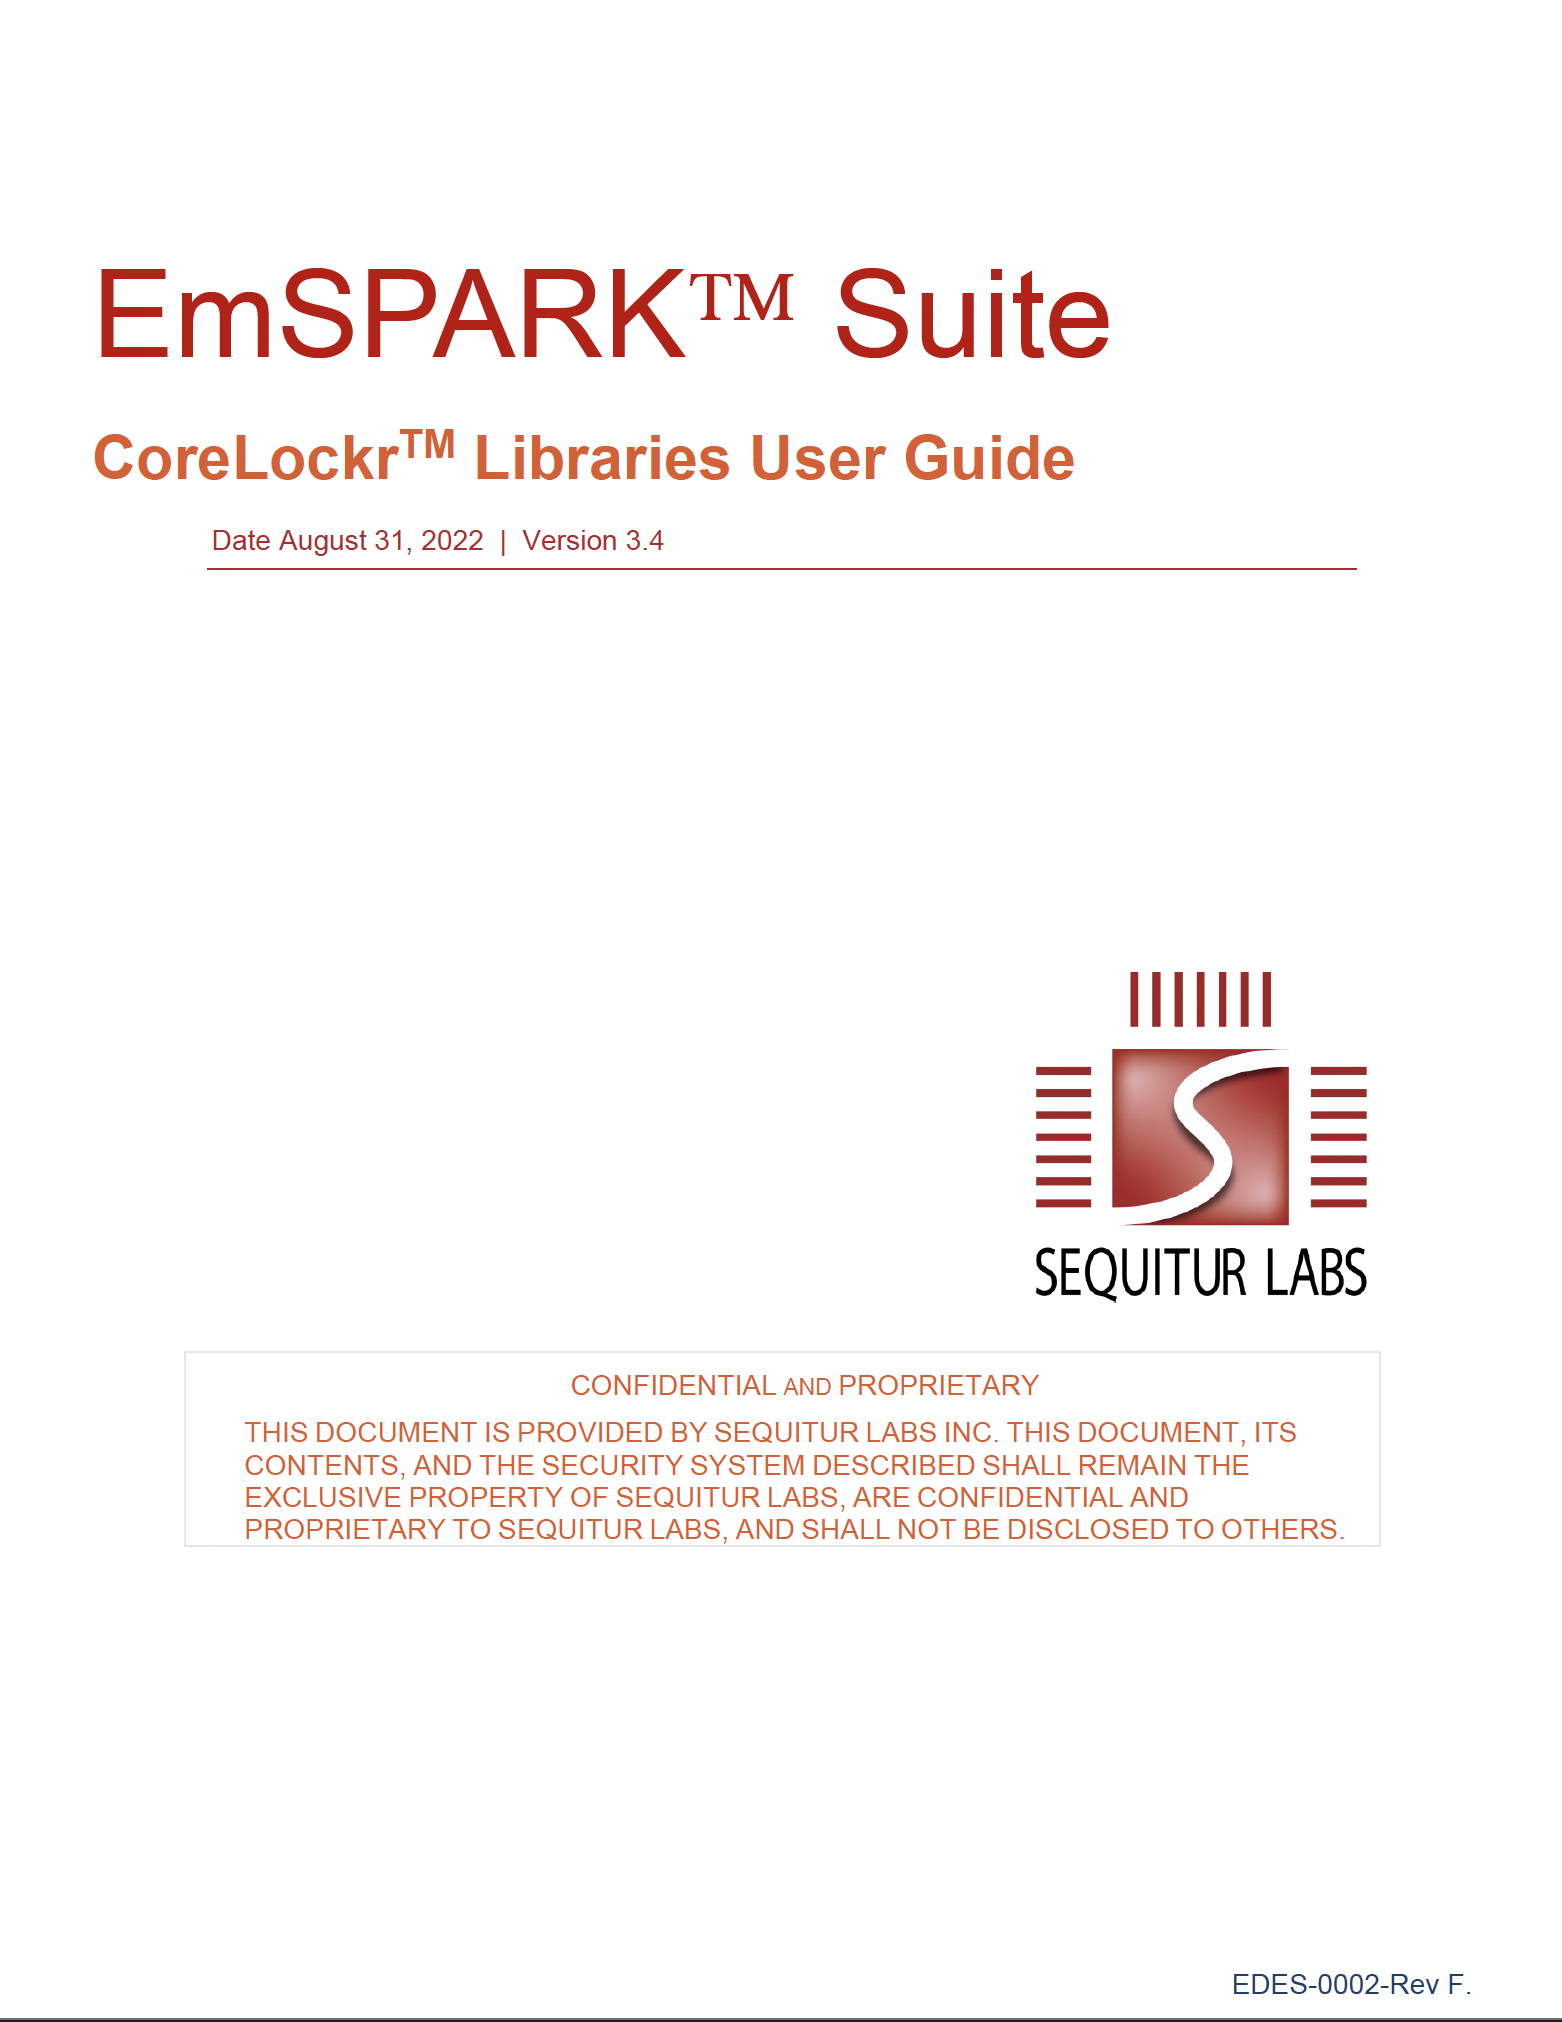 EmSPARK™ Security Suite CoreLOCKR™ Libraries User Guide version 3.2